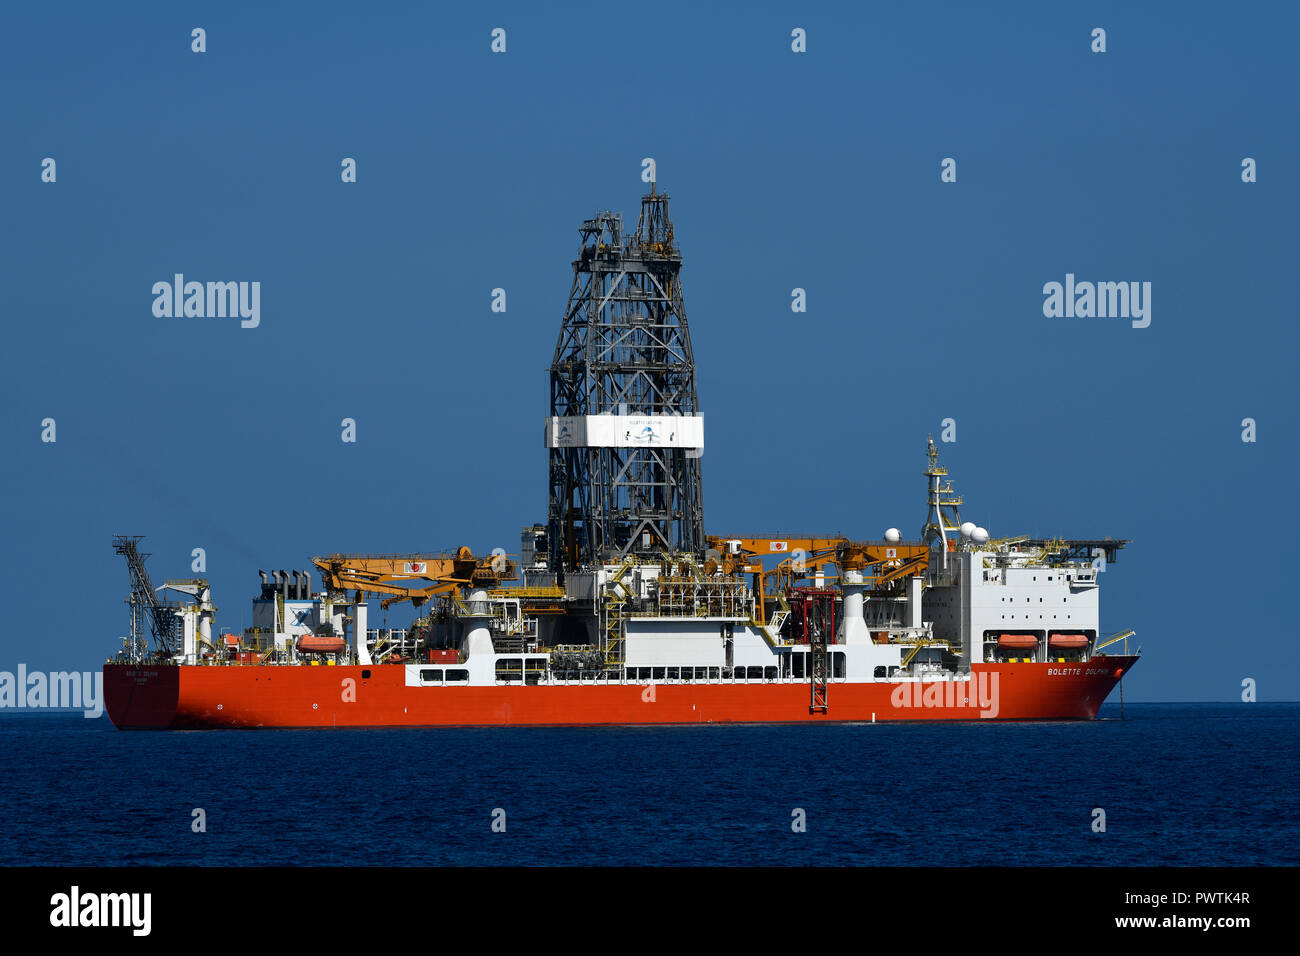 Oil drilling vessel Bolette Dolphin, Tenerife, Canary Islands, Spain Stock Photo